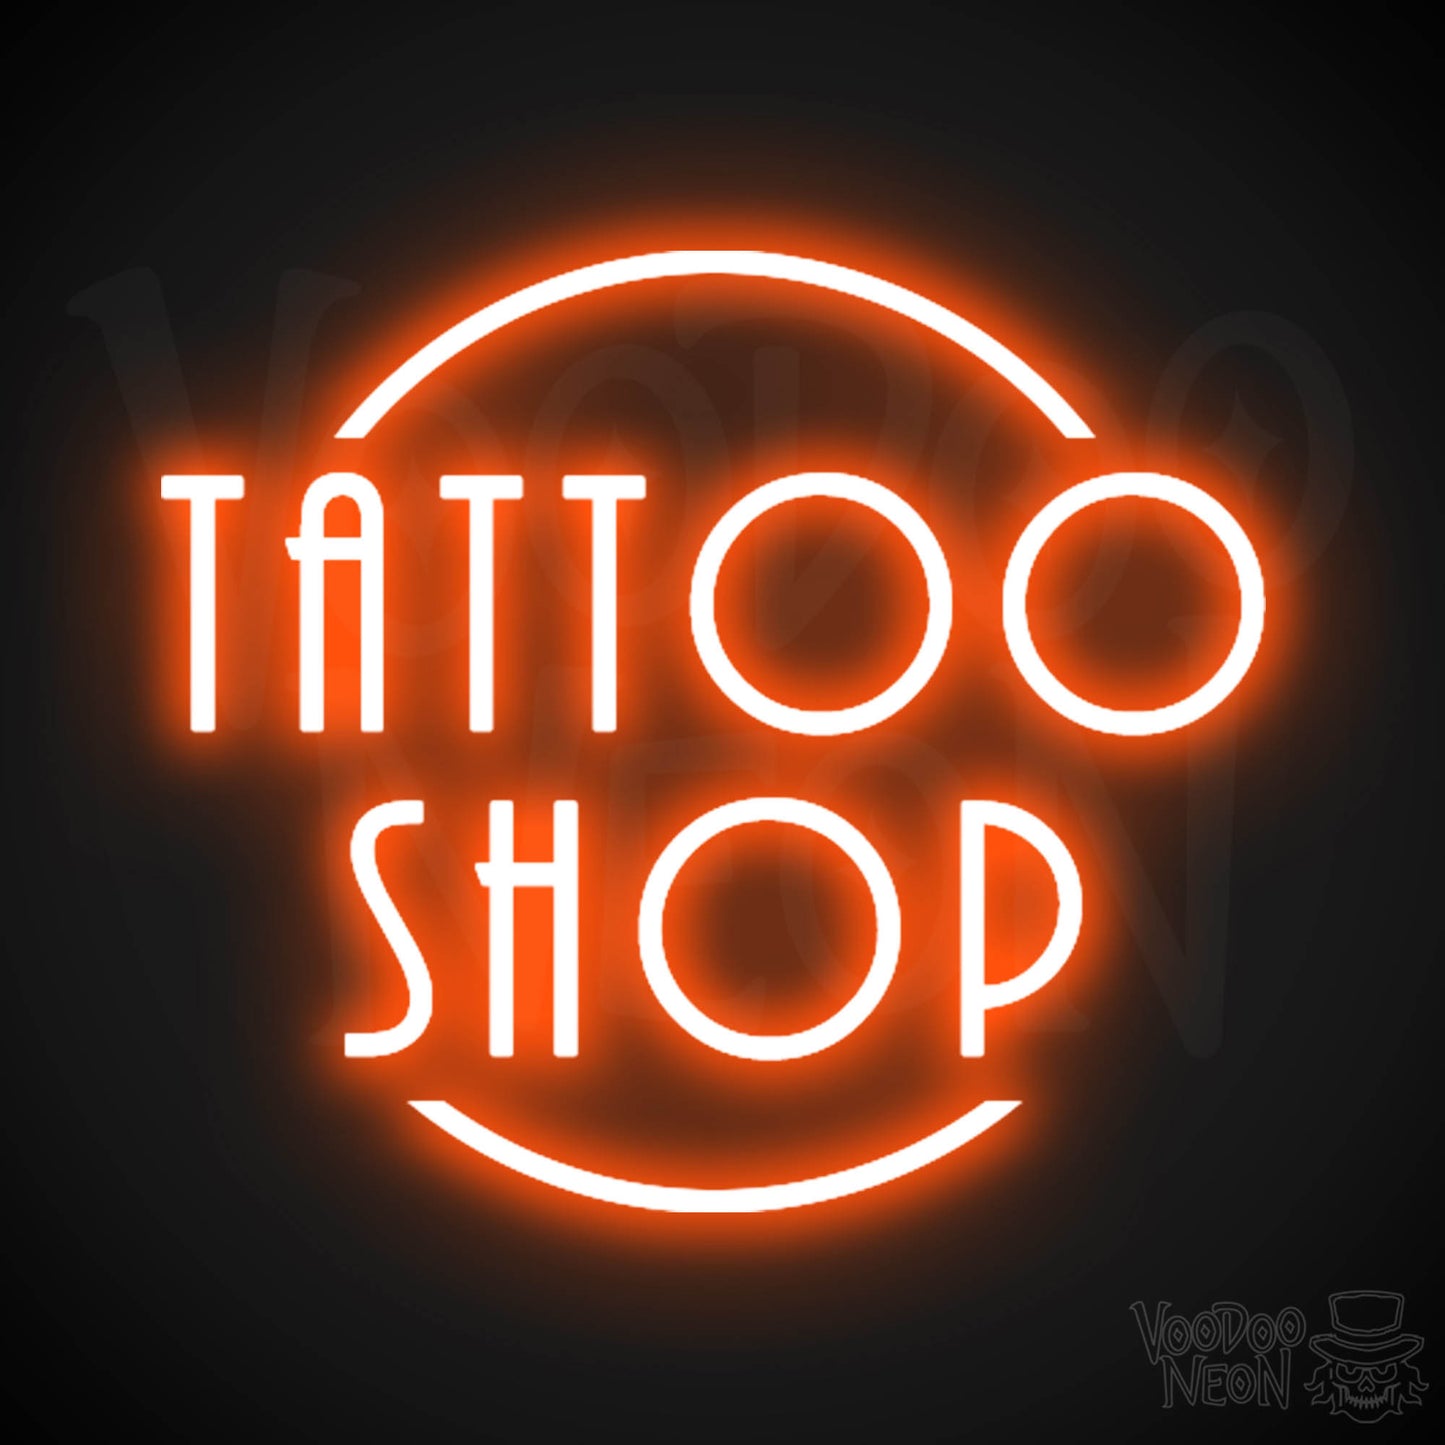 Tattoo Shop Neon Sign - Neon Tattoo Shop Sign - Tattoo Sign - Color Orange